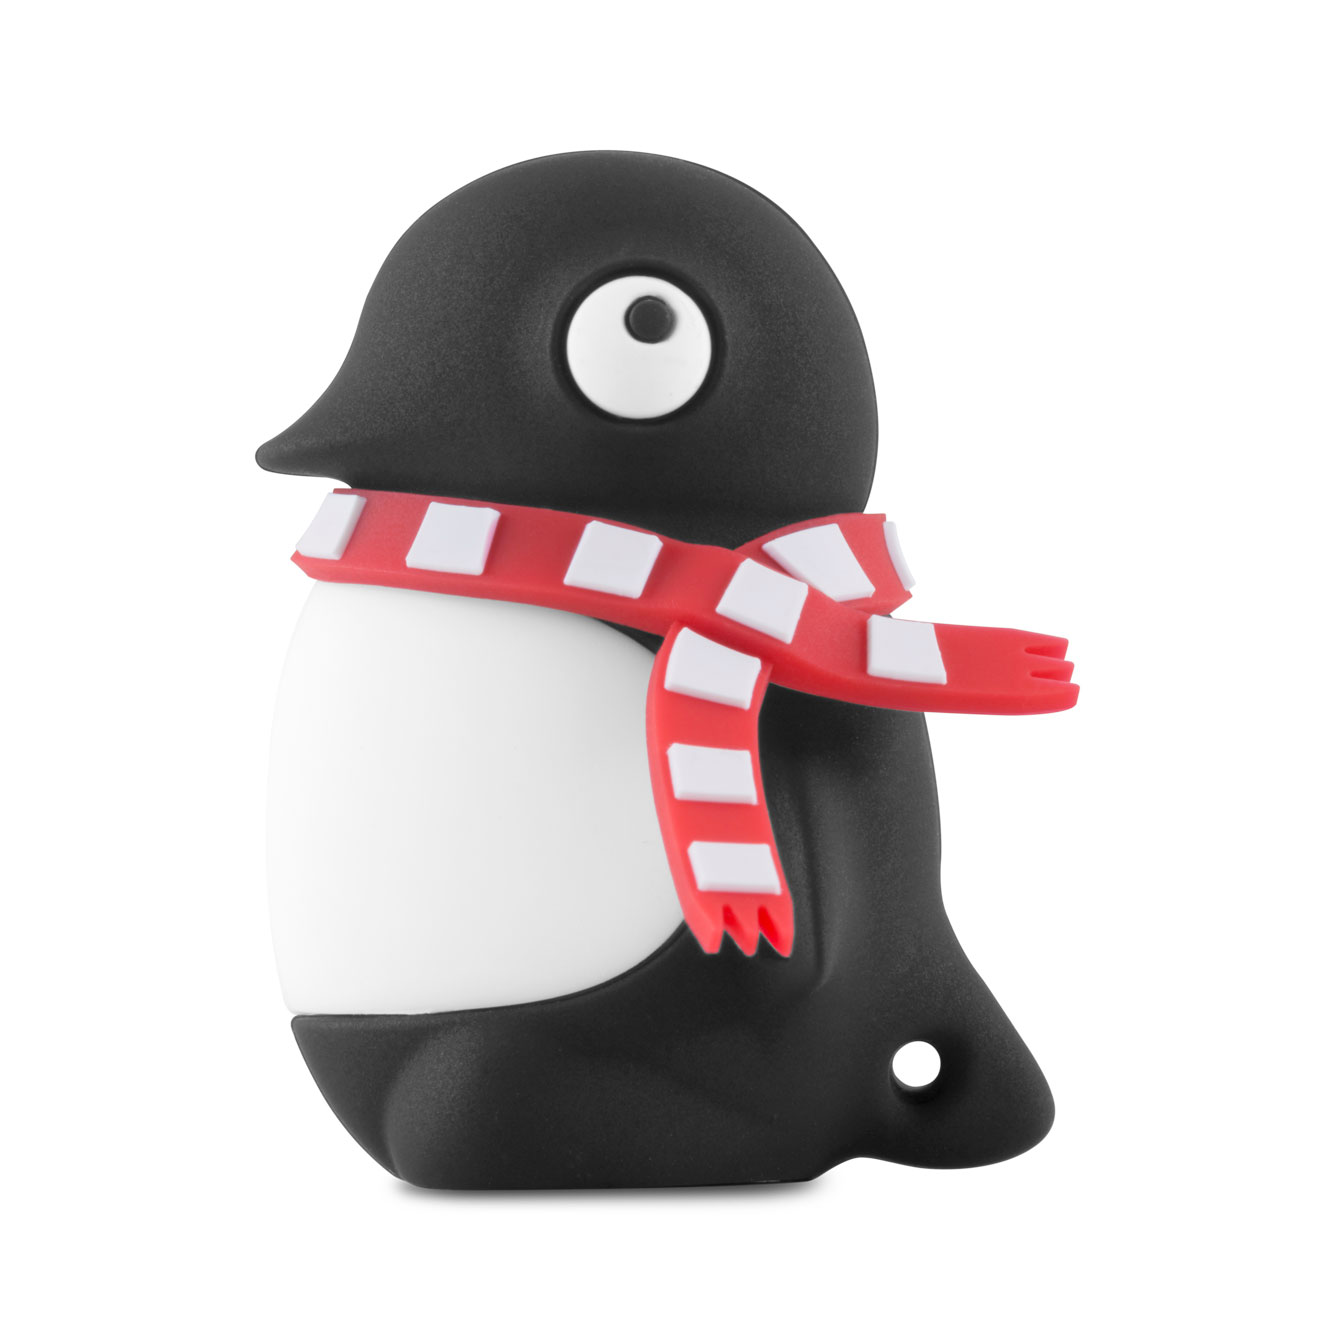 Maru Penguin - Driver 3.0 - Standard USB Flash Drive - USB Drive - Figurines - Mobile Life - Products Bone